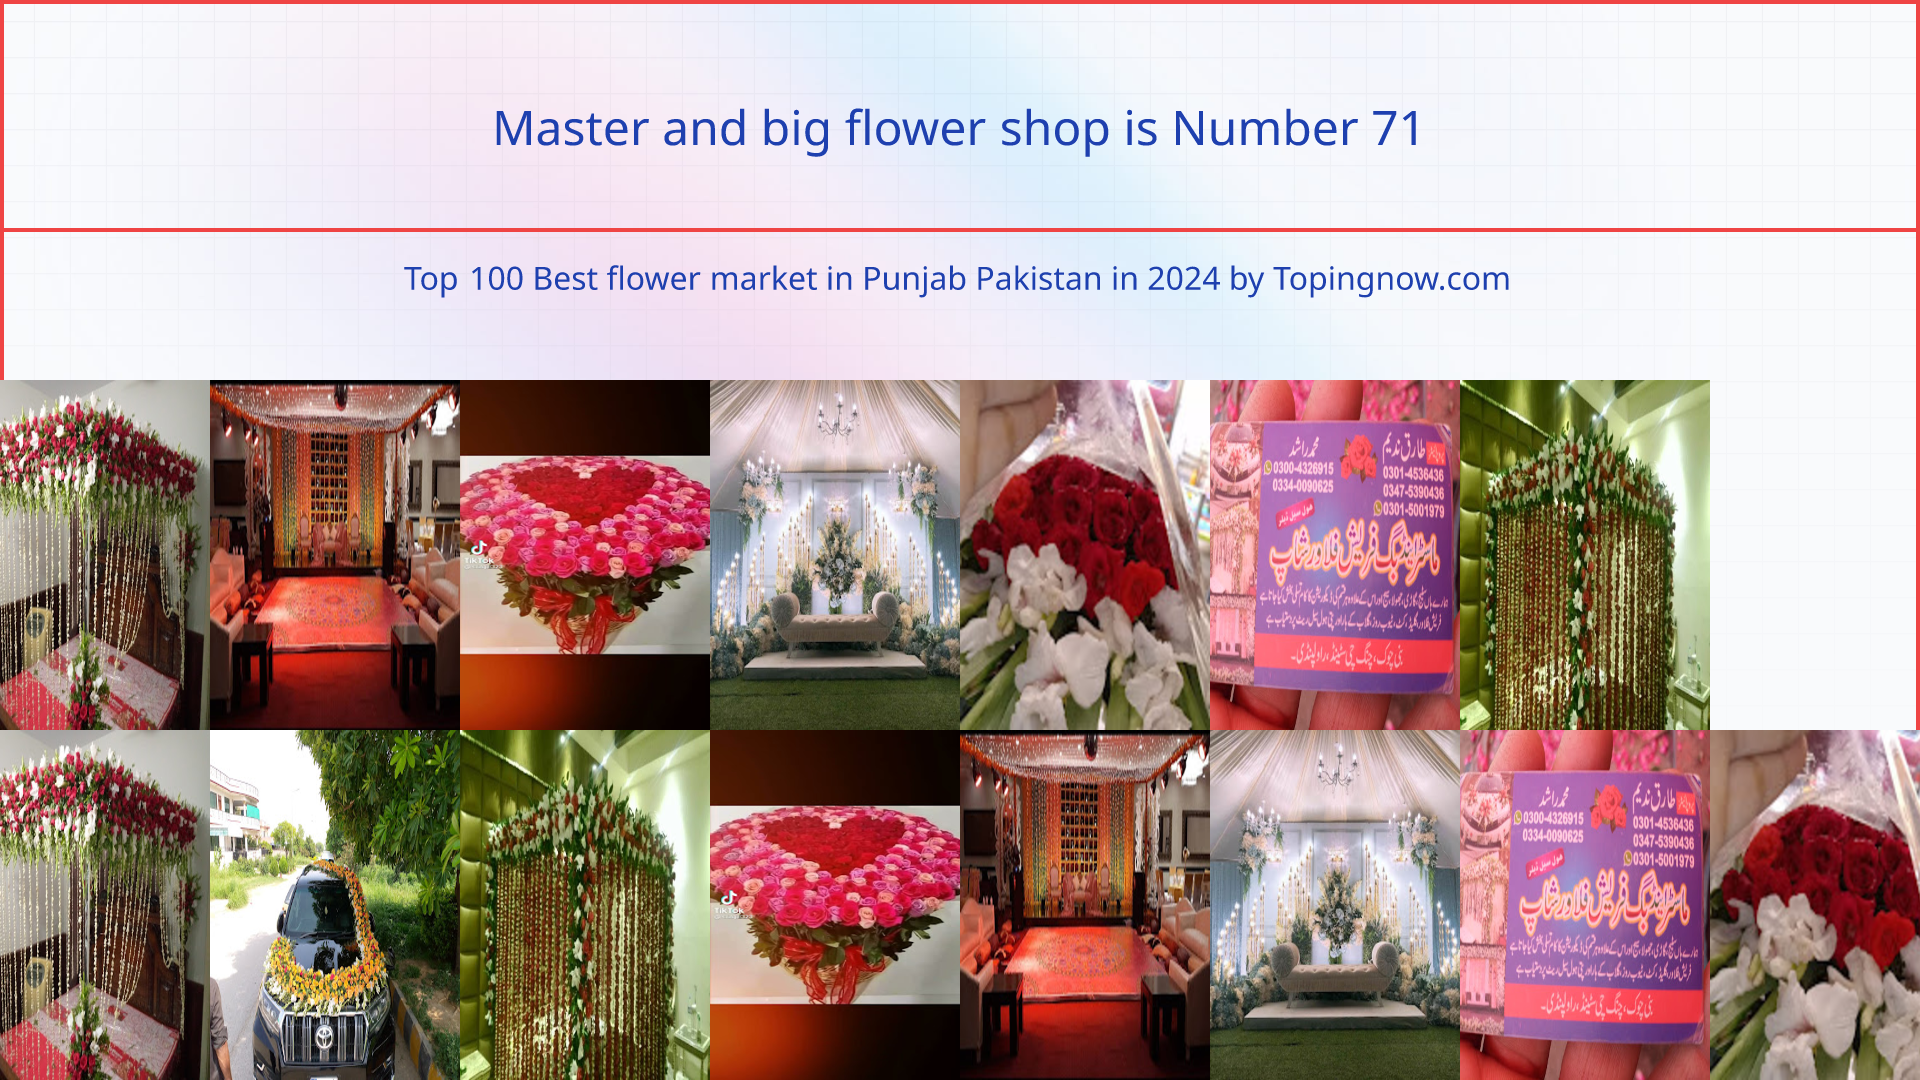 Master and big flower shop: Top 100 Best flower market in Punjab Pakistan in 2024